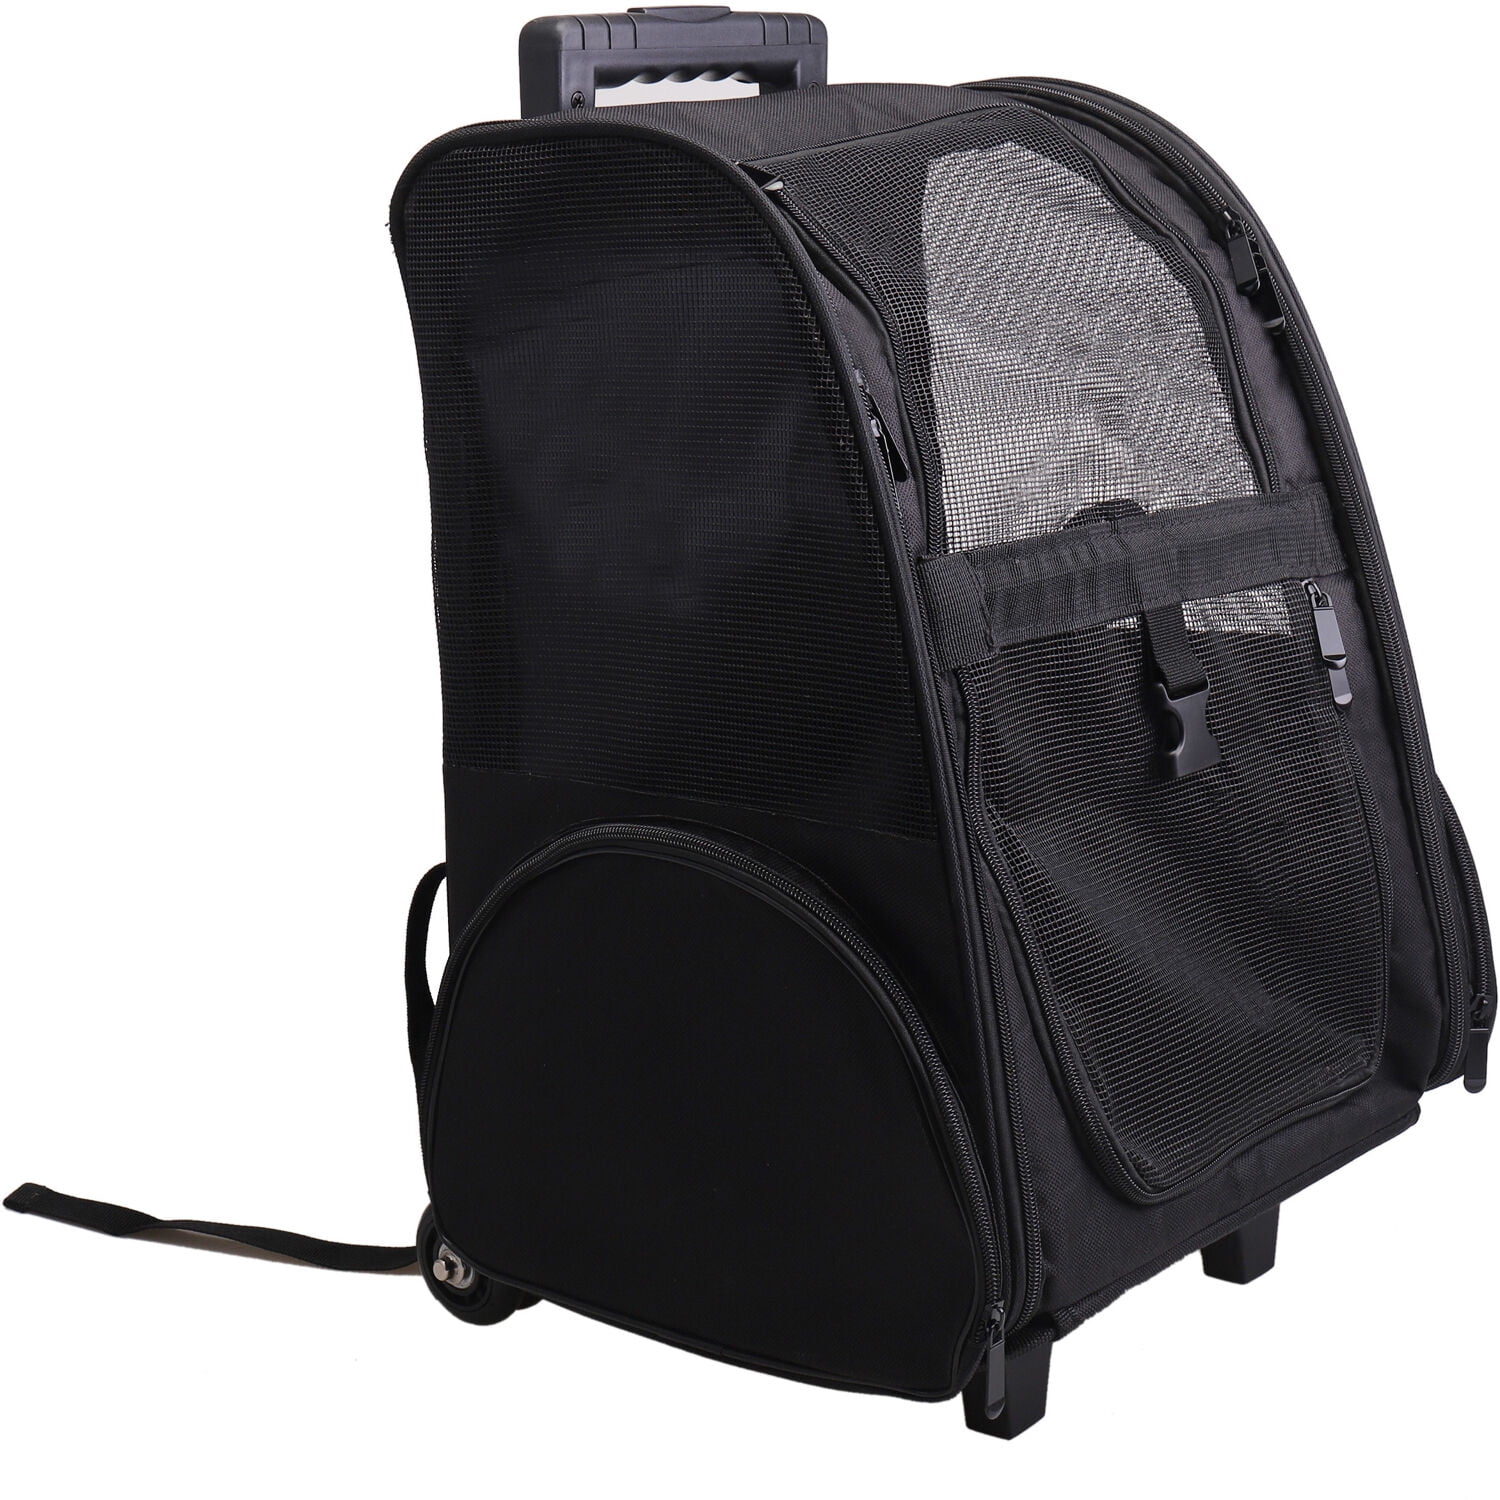 Kopeks Deluxe Backpack Pet Travel Carrier with Double Wheels - Black 